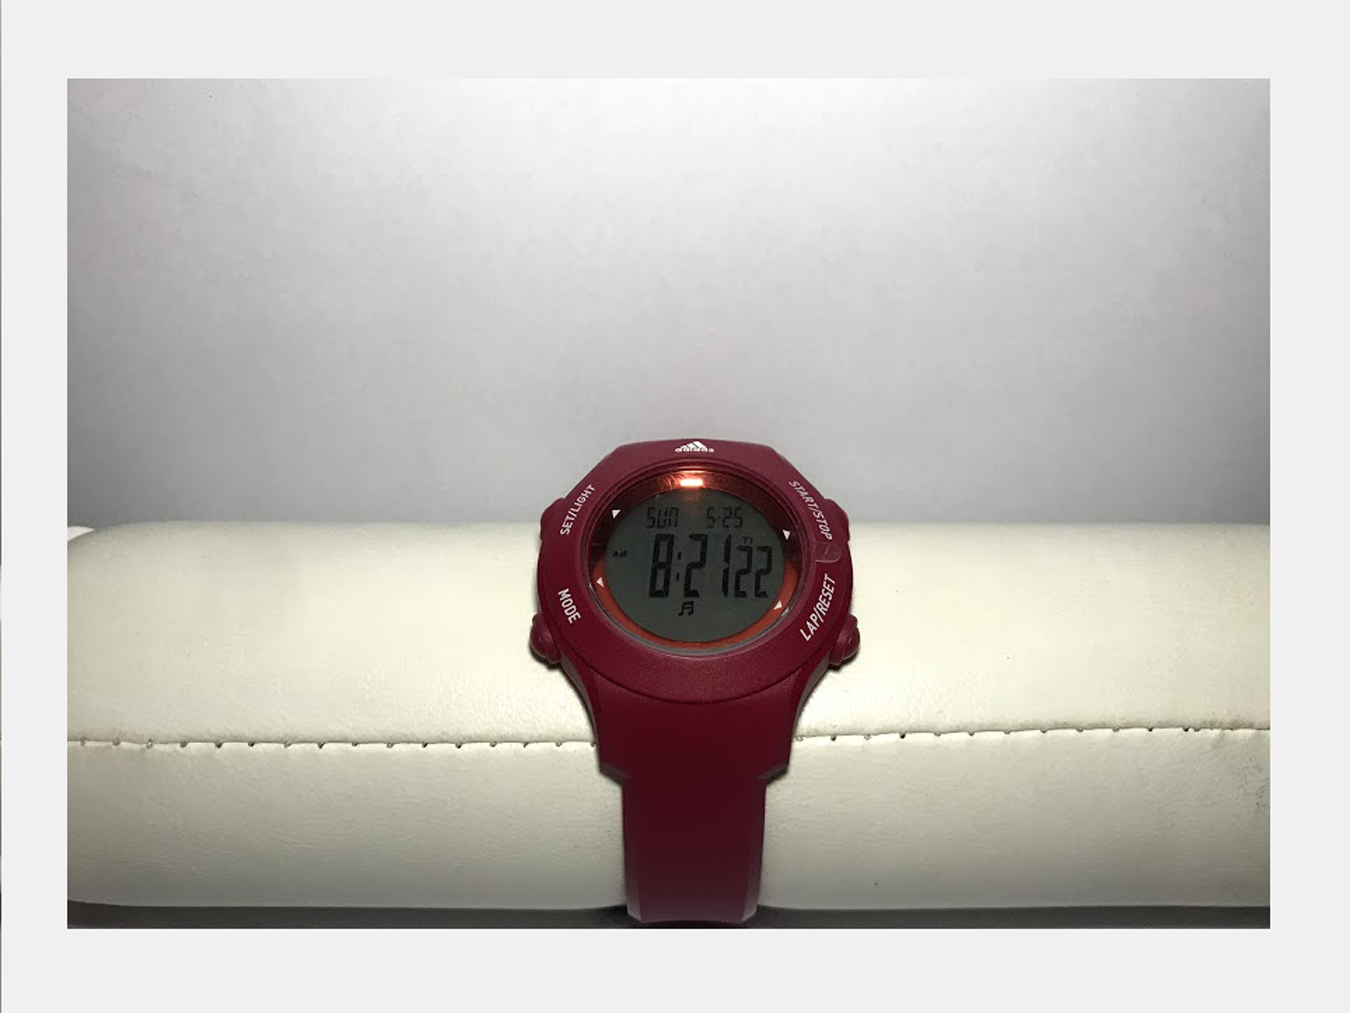 Relógio Adidas Performance - ADP3286-8BN